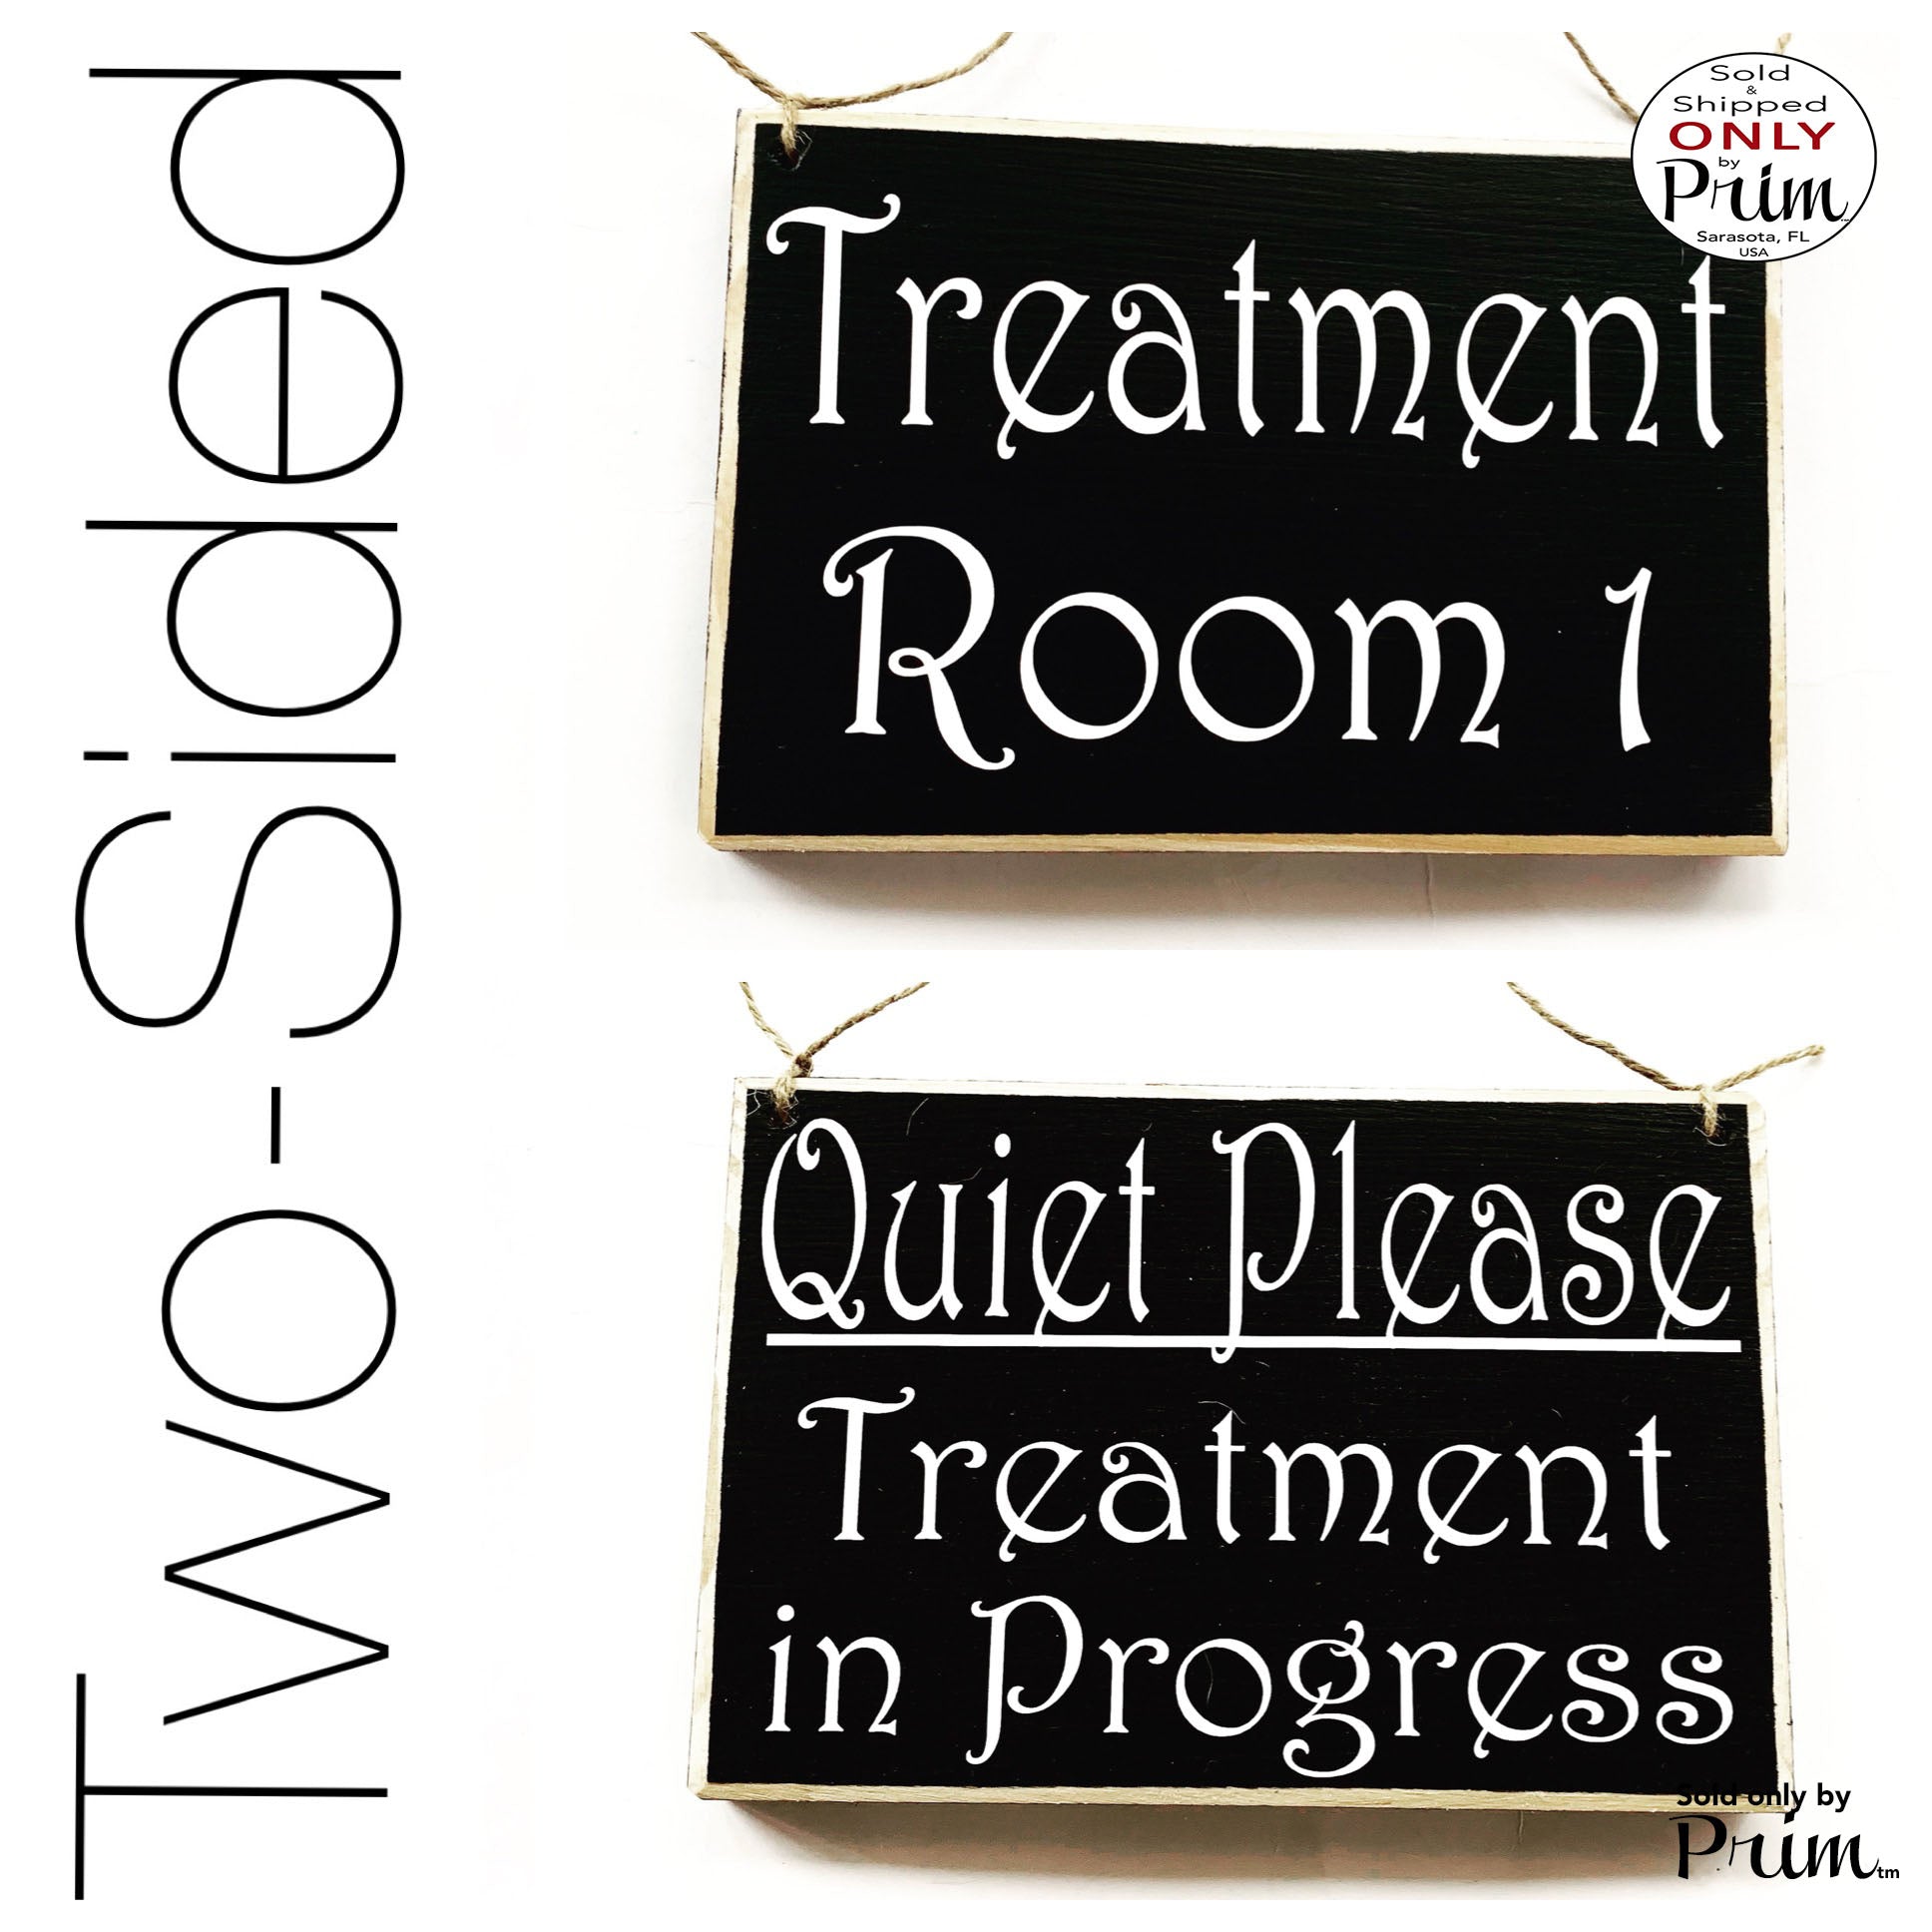 8x6 Treatment Room Quiet Please Treatment In Progress Custom Wood Sign | Office Business Salon Spa Medical Clinic Plaque Do Not Disturb